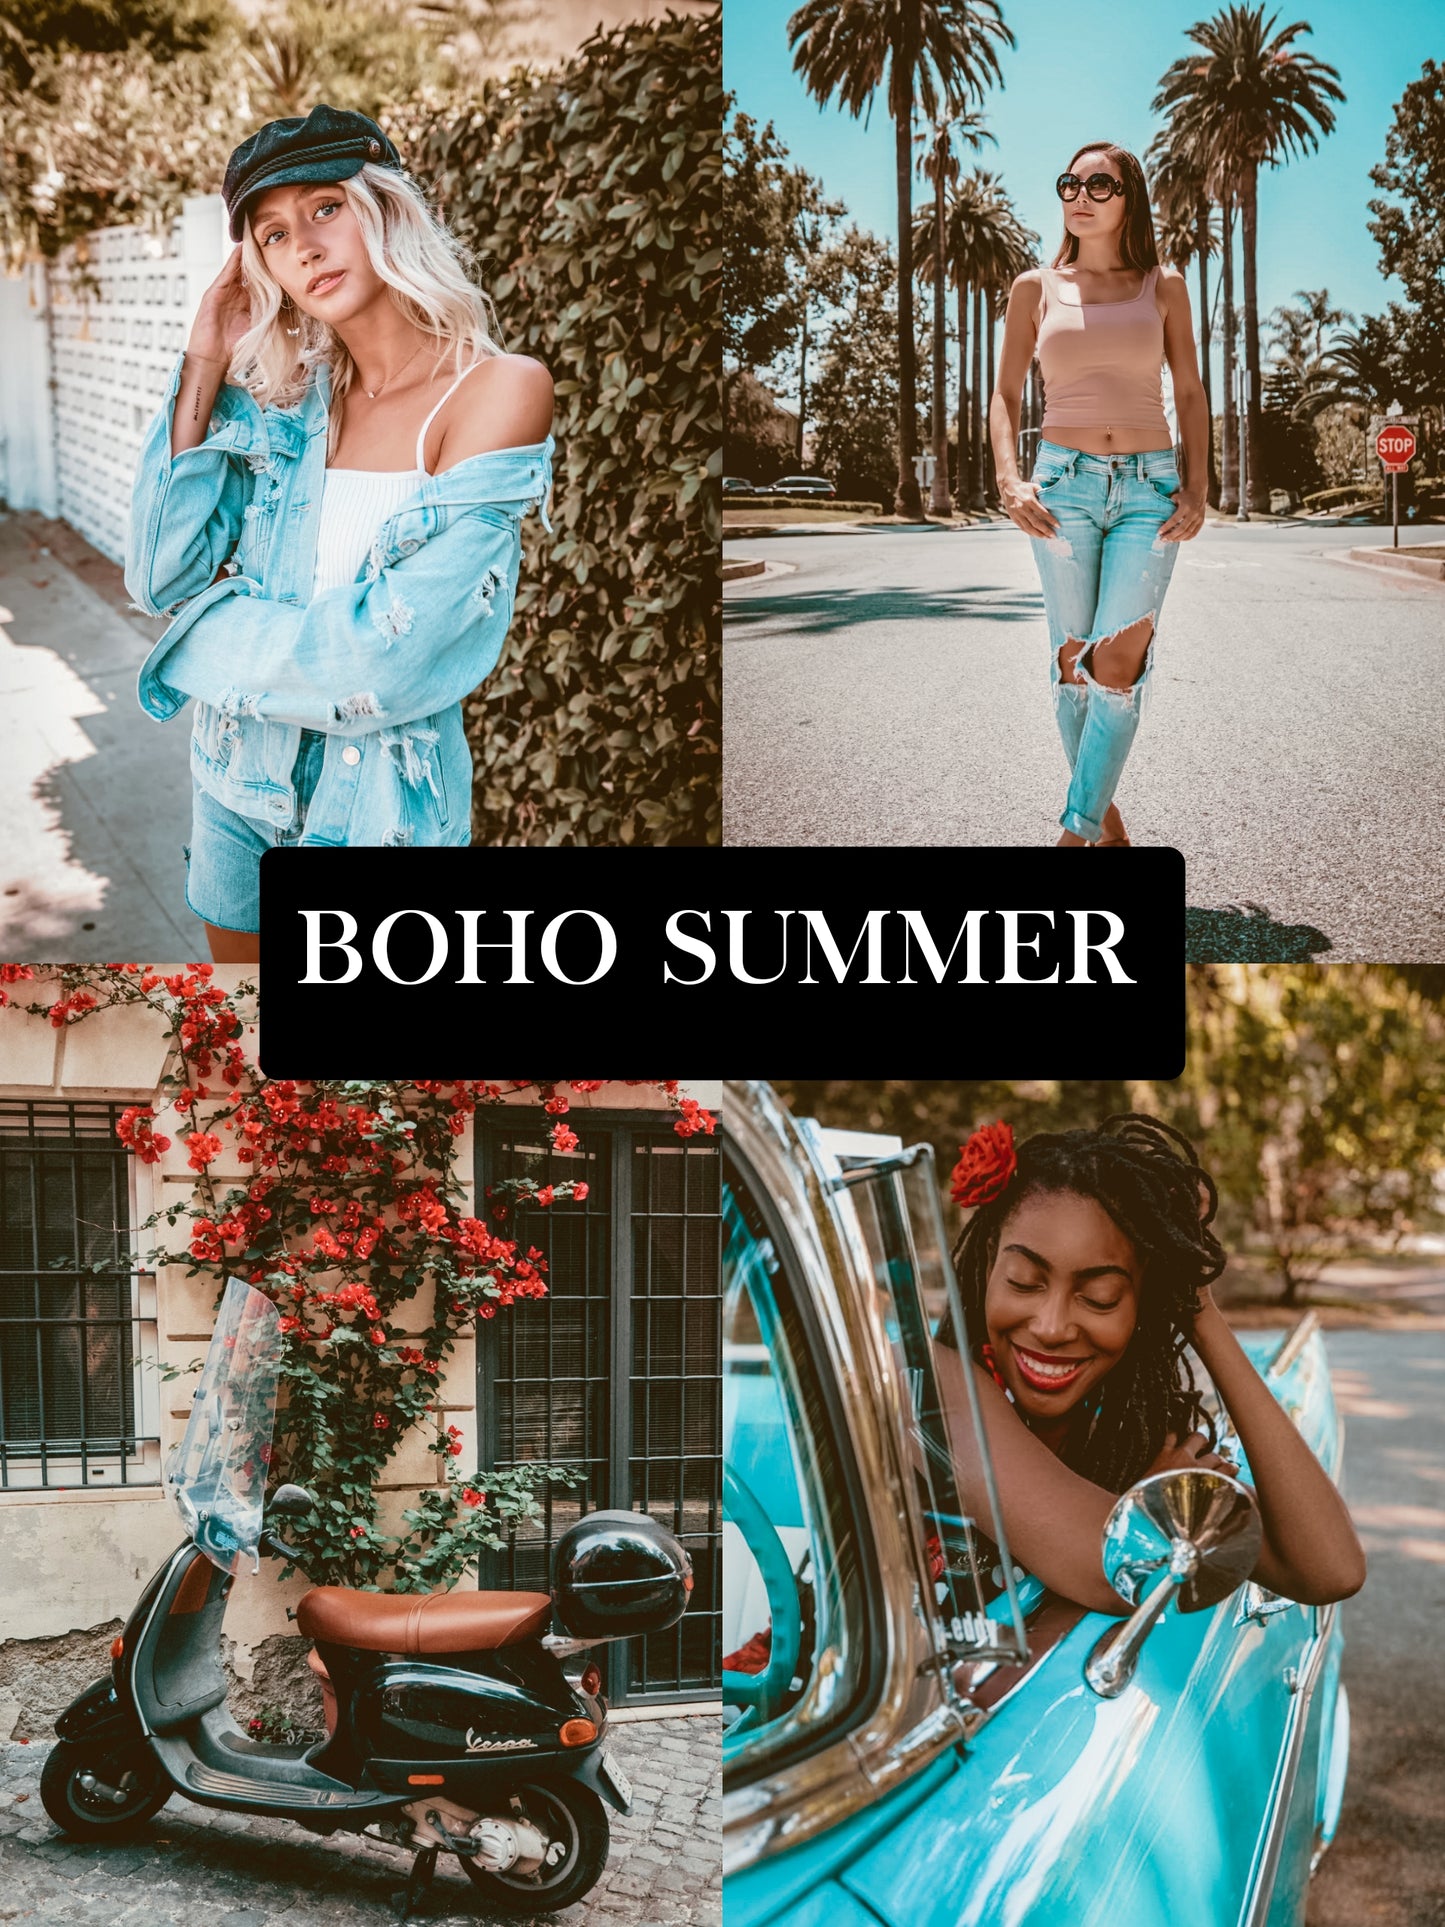 Boho Summer - One Click Filter